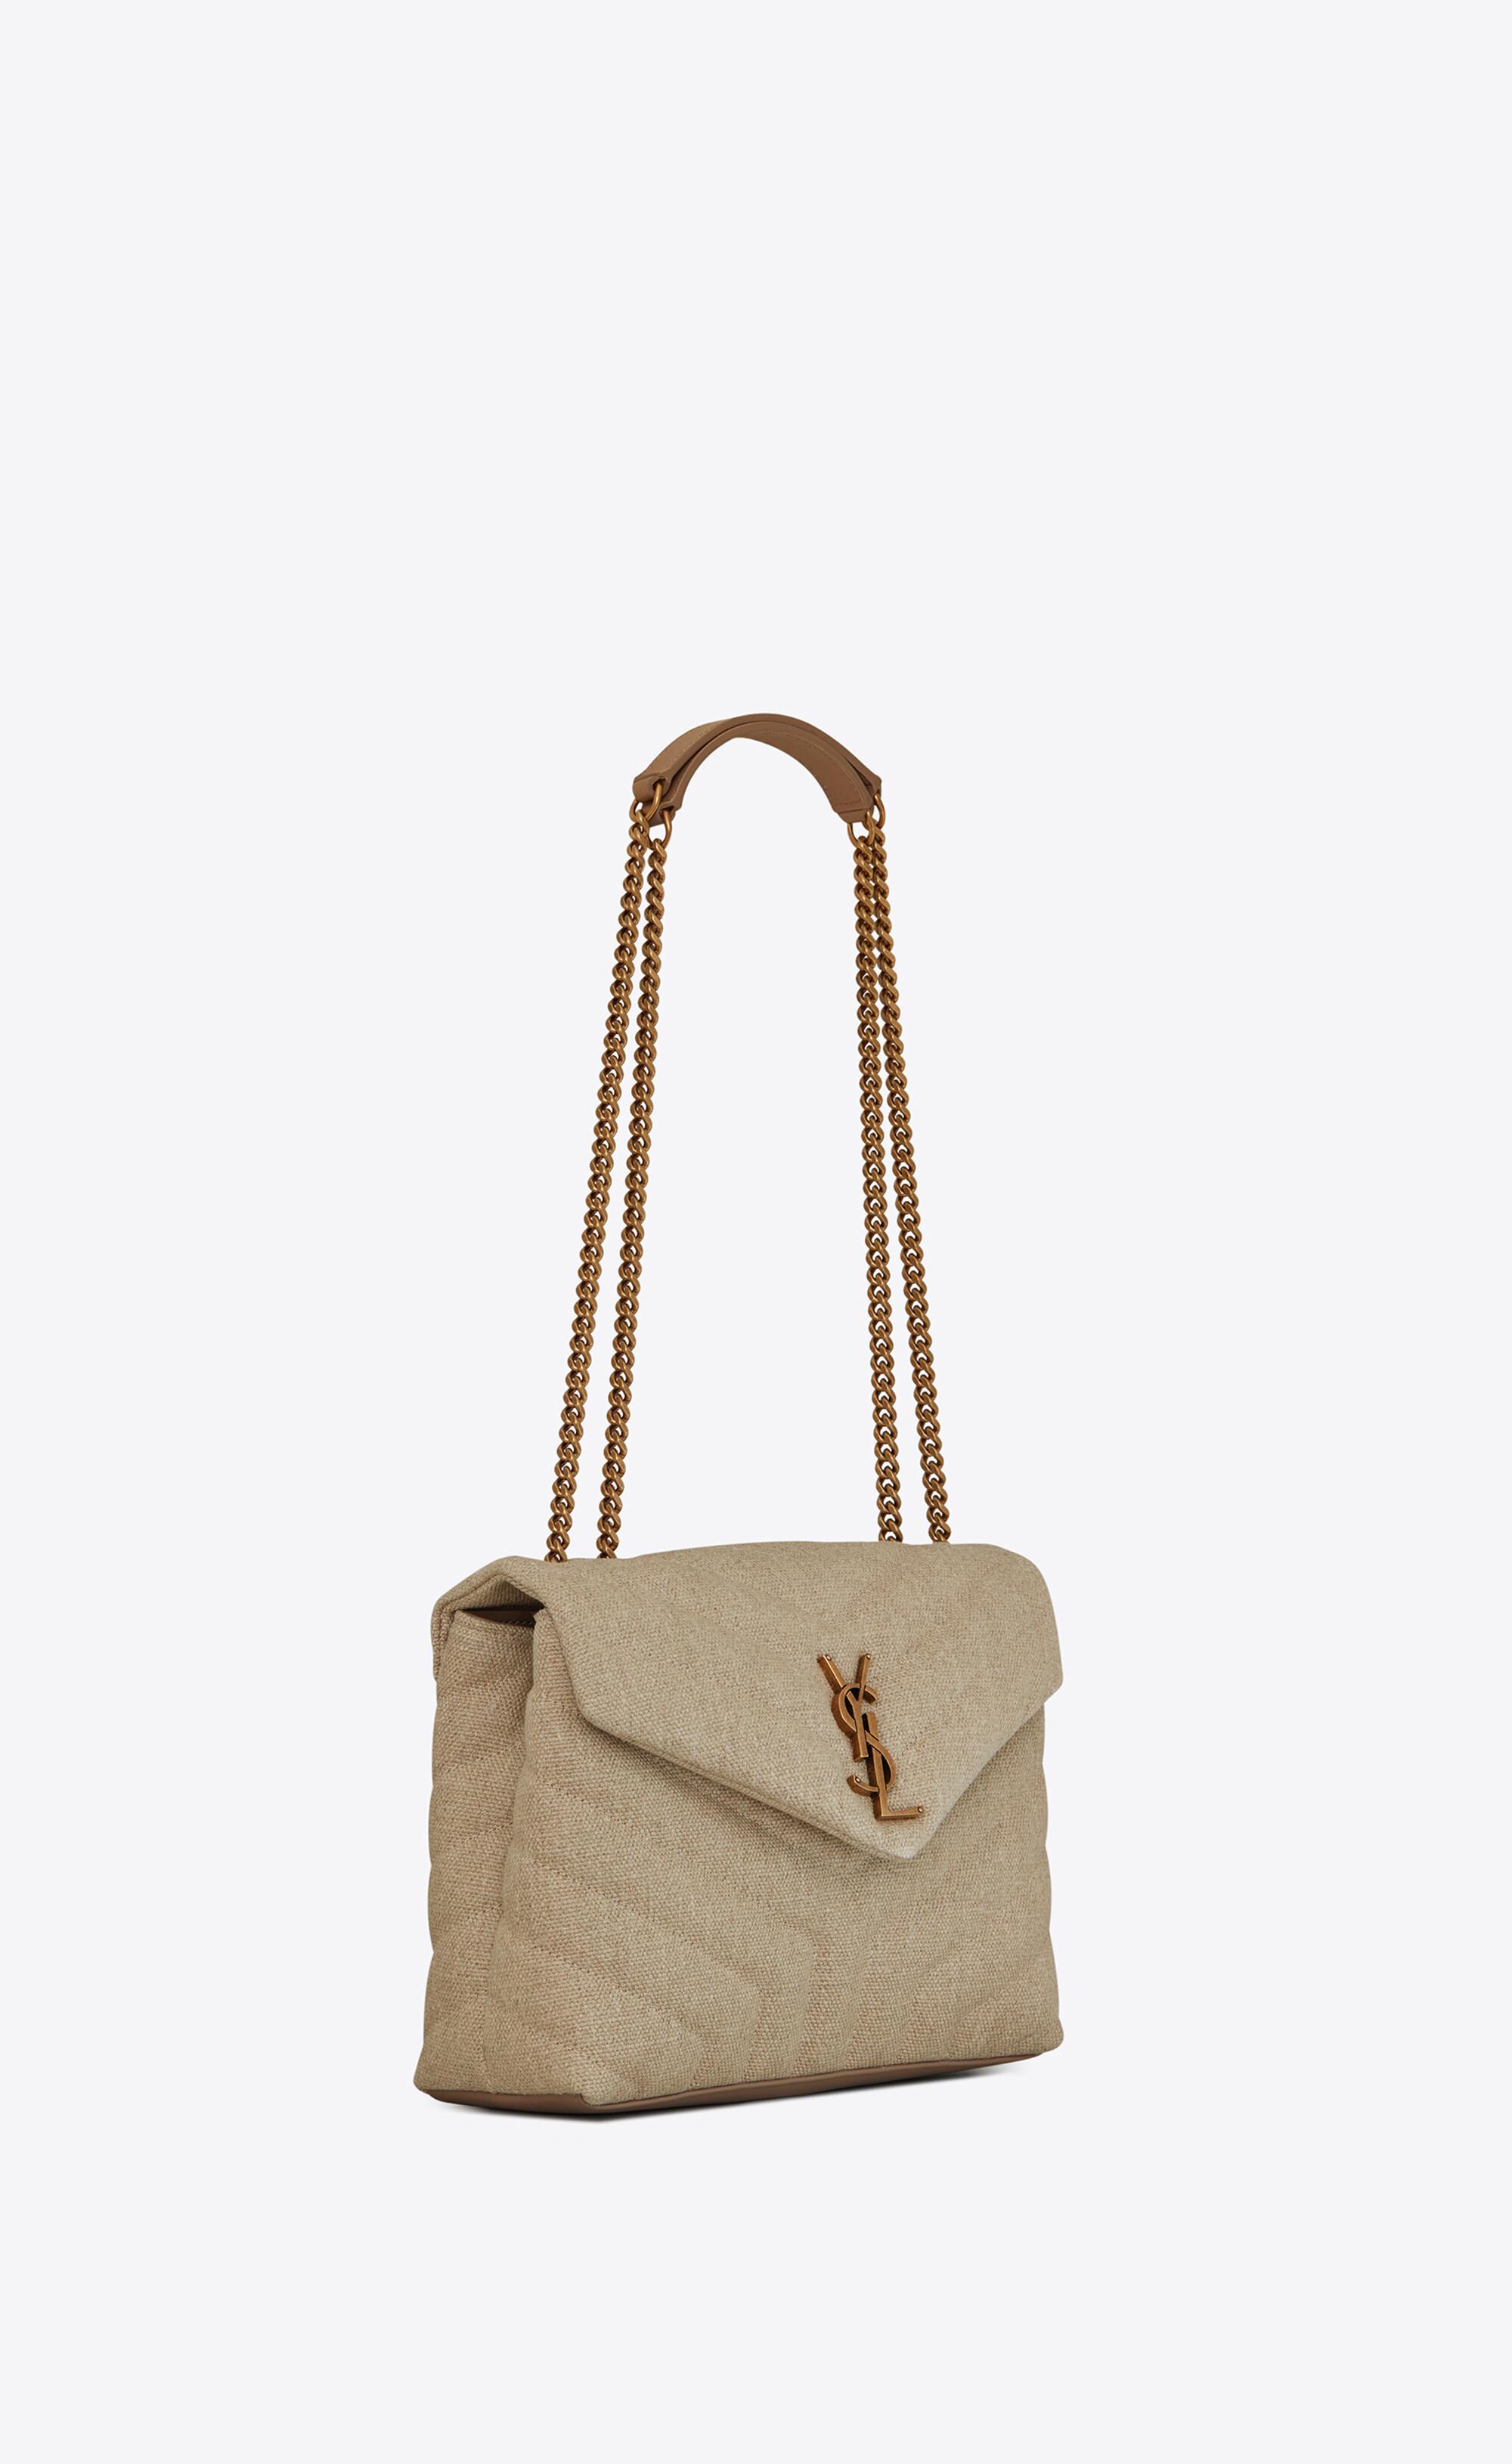 Saint Laurent Loulou Small Linen Shoulder Bag in Natural